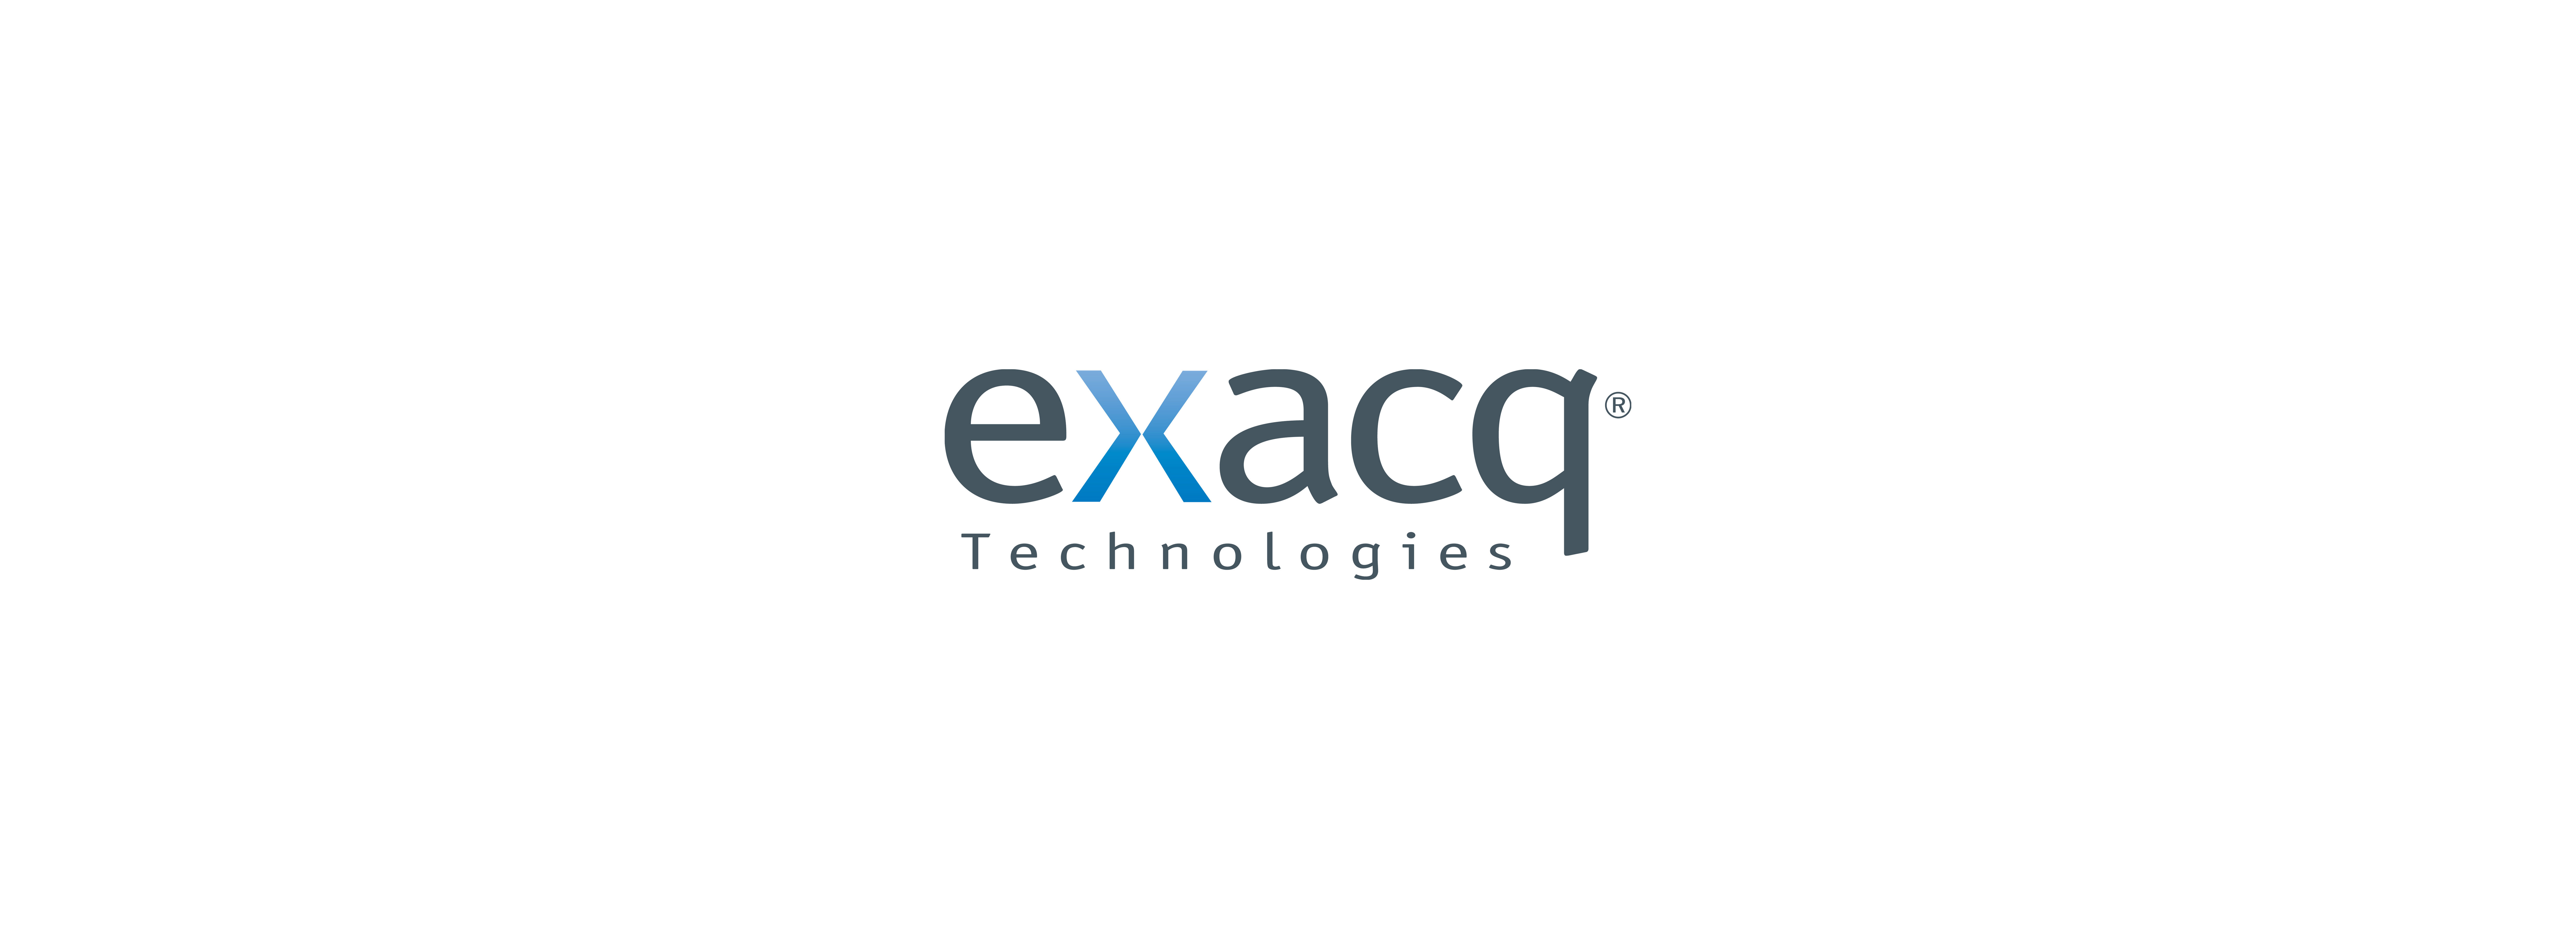 exacq Technologies logo